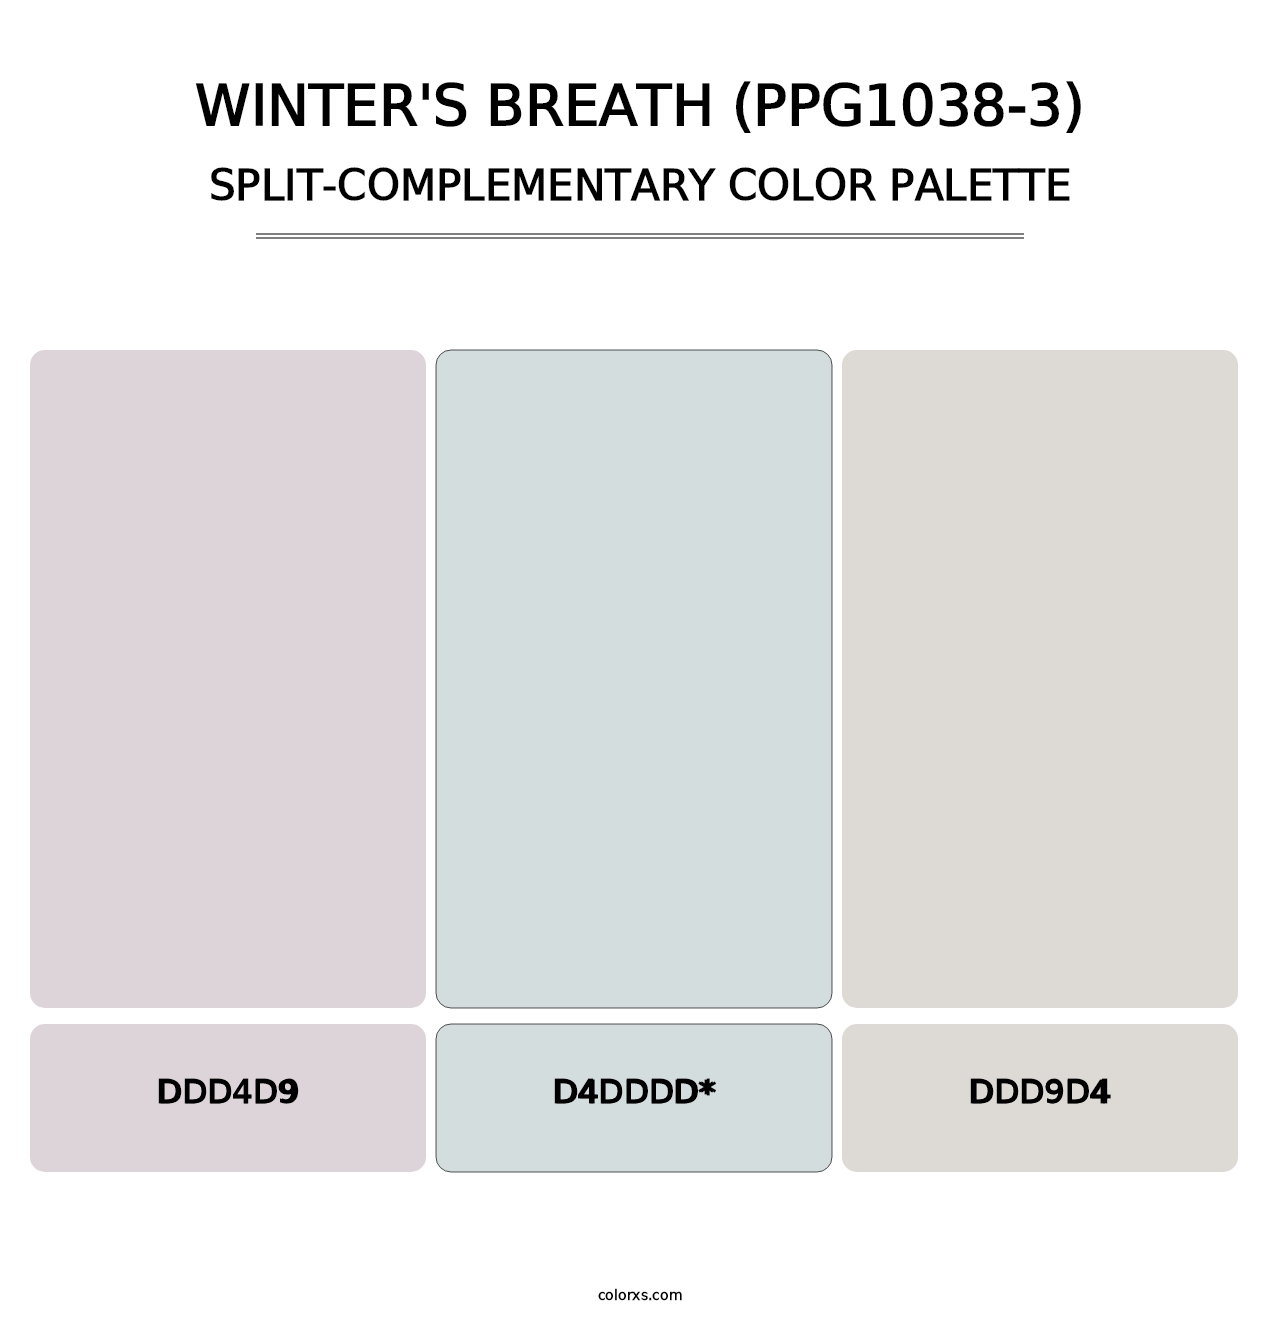 Winter's Breath (PPG1038-3) - Split-Complementary Color Palette